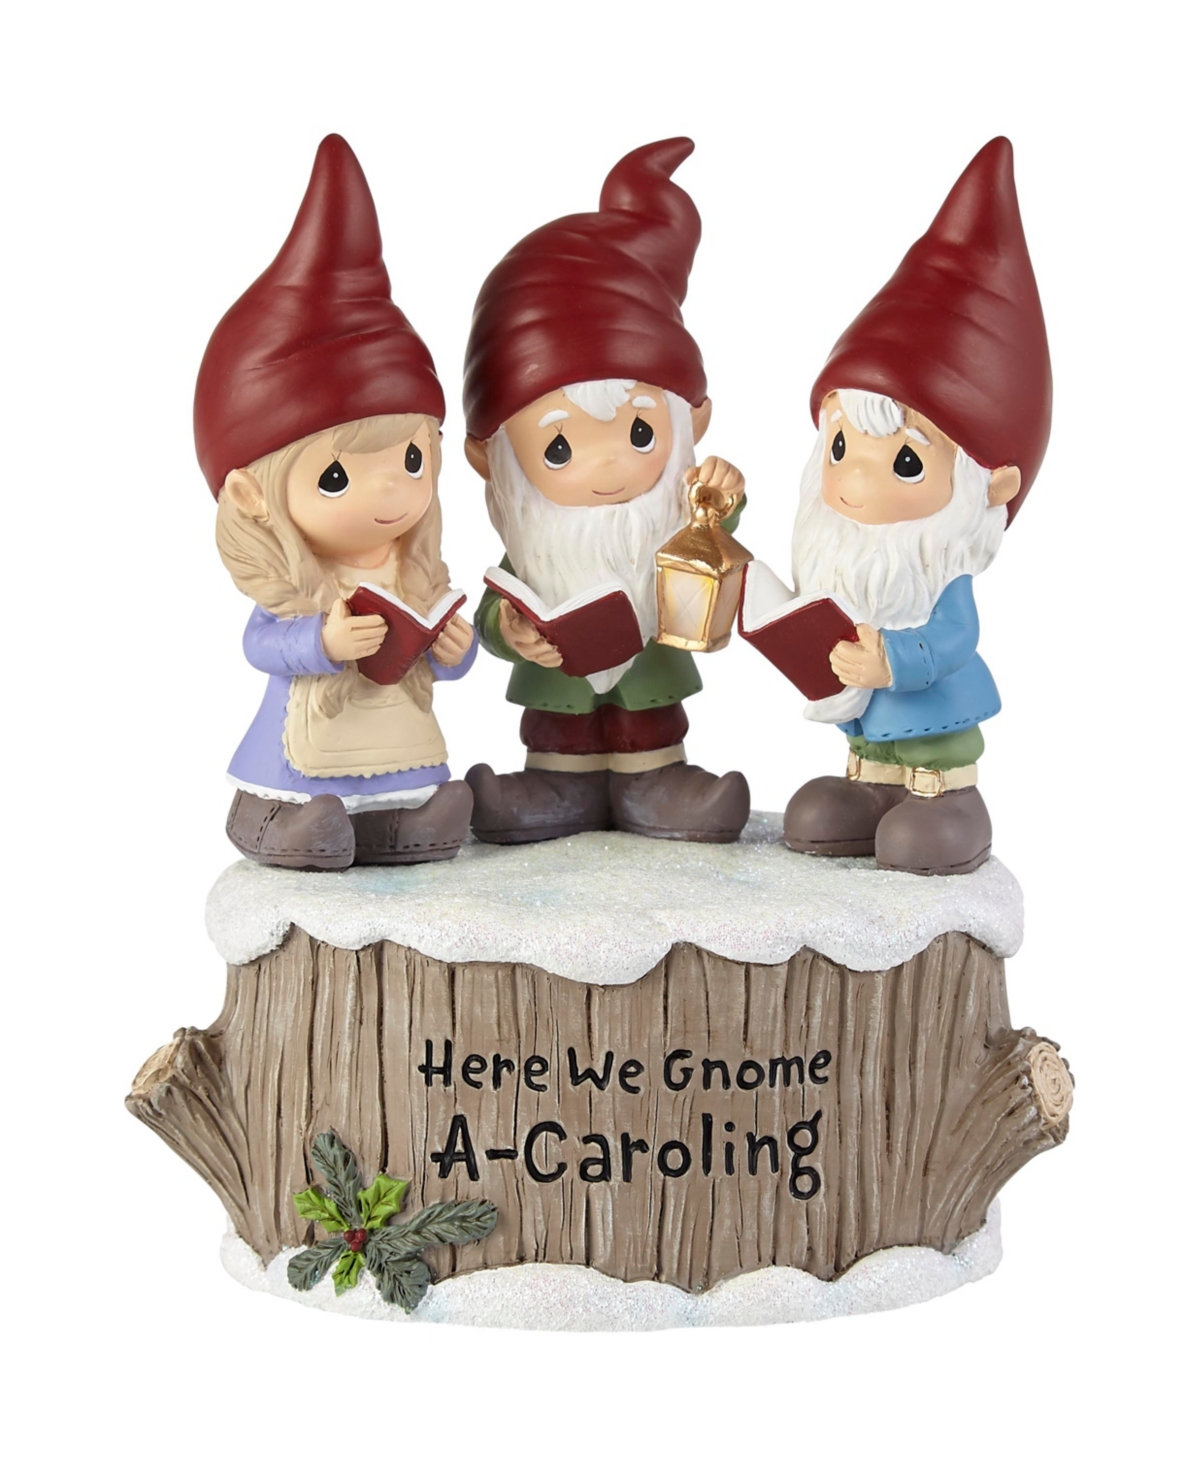 221107 Here We Gnome a Caroling Musical Figurine - Multicolor